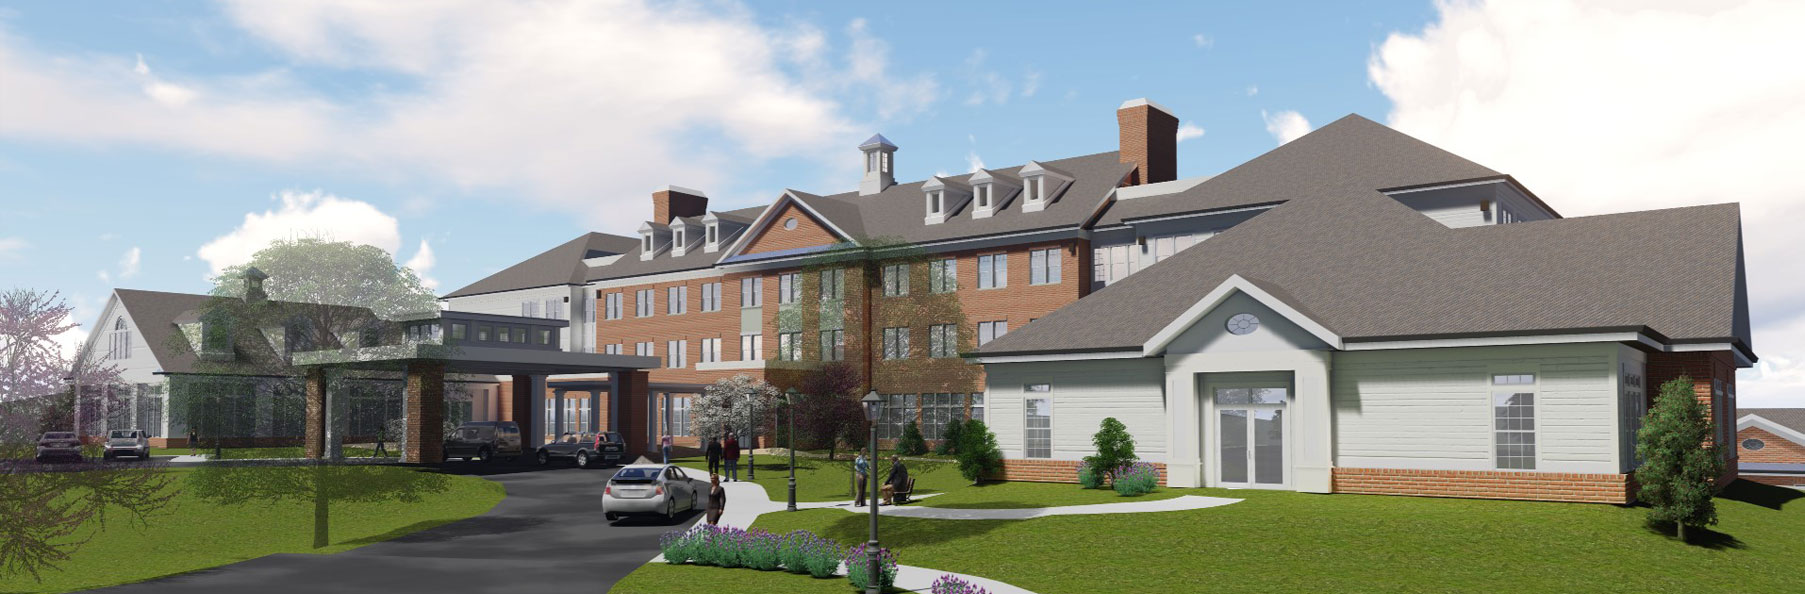 A rendering of The Culpeper senior living community